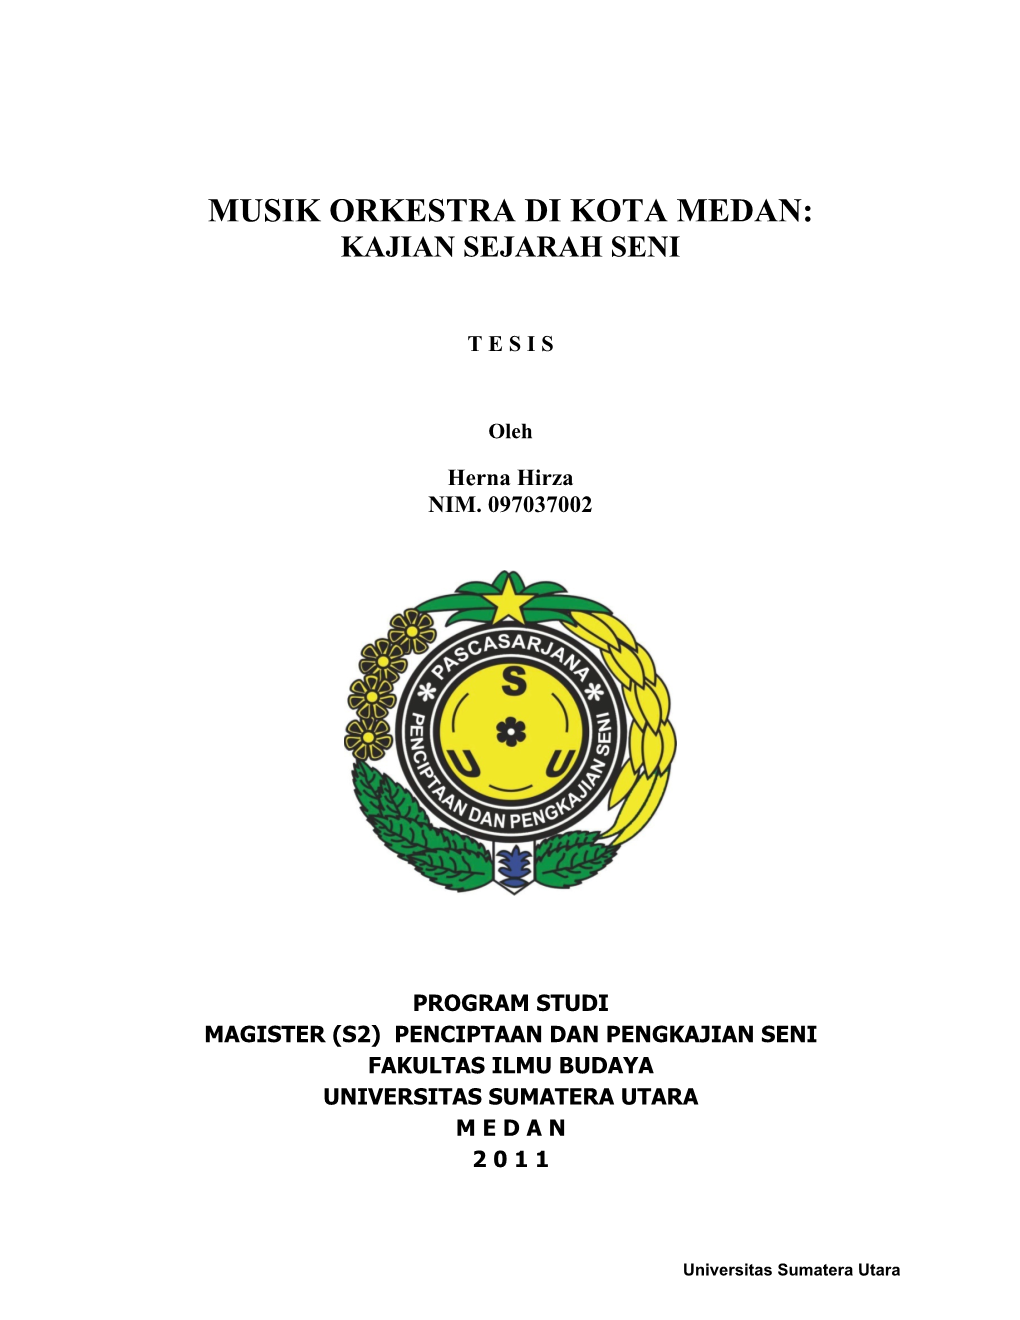 Musik Orkestra Di Kota Medan: Kajian Sejarah Seni